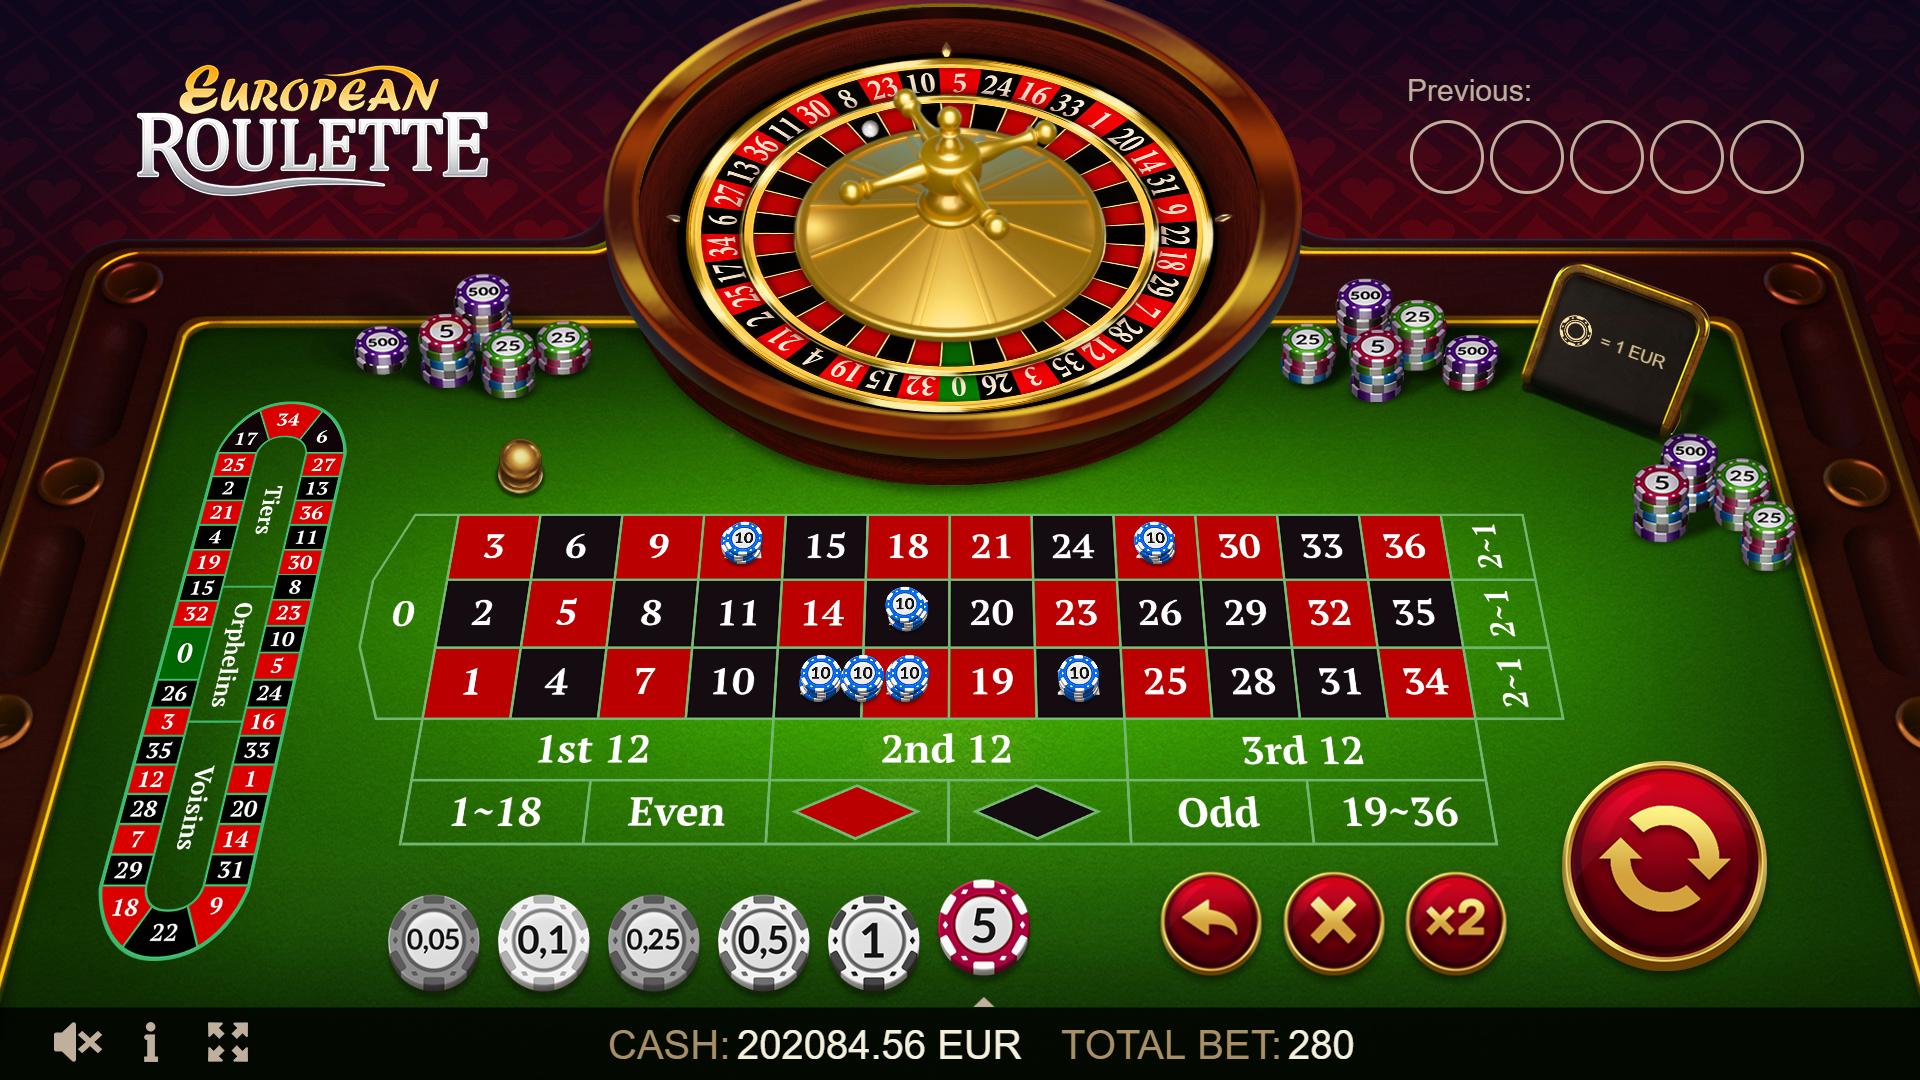 Casino online games